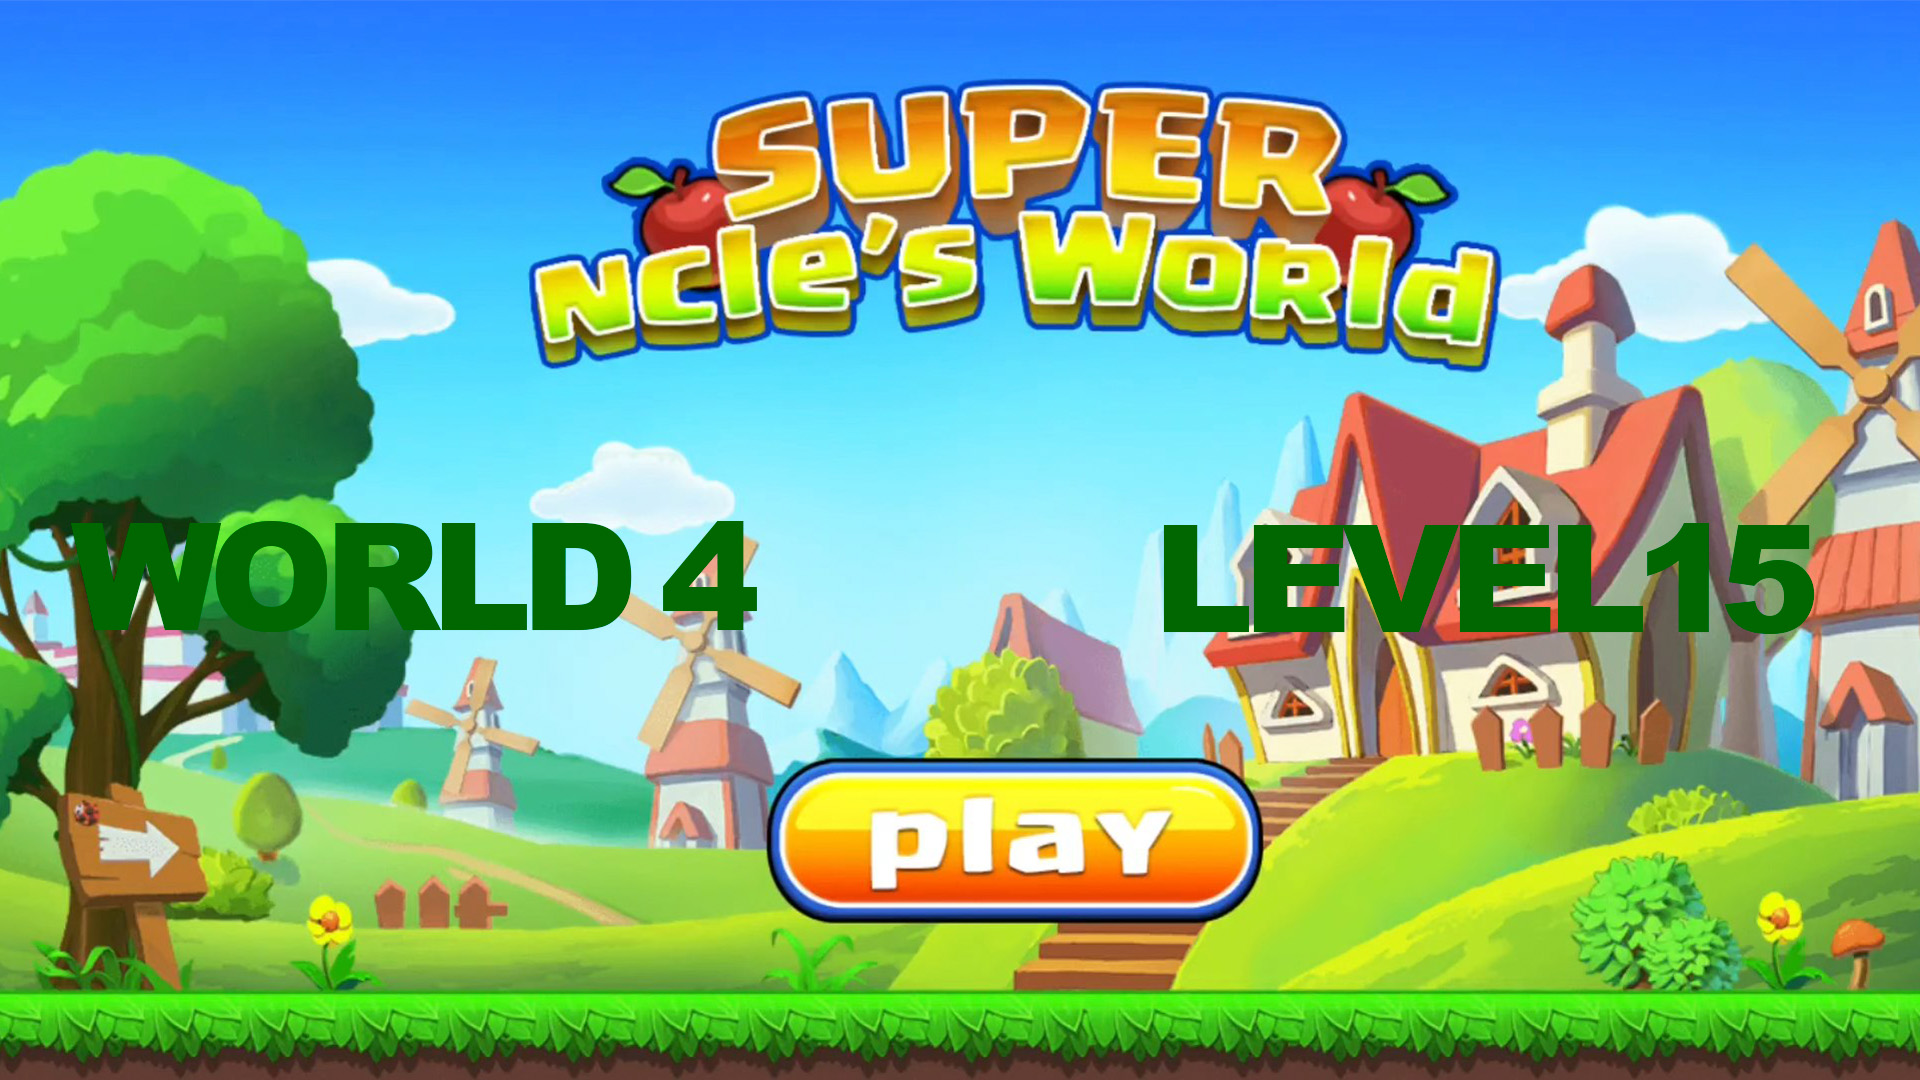 Super ncle's  World 4. Level 15.